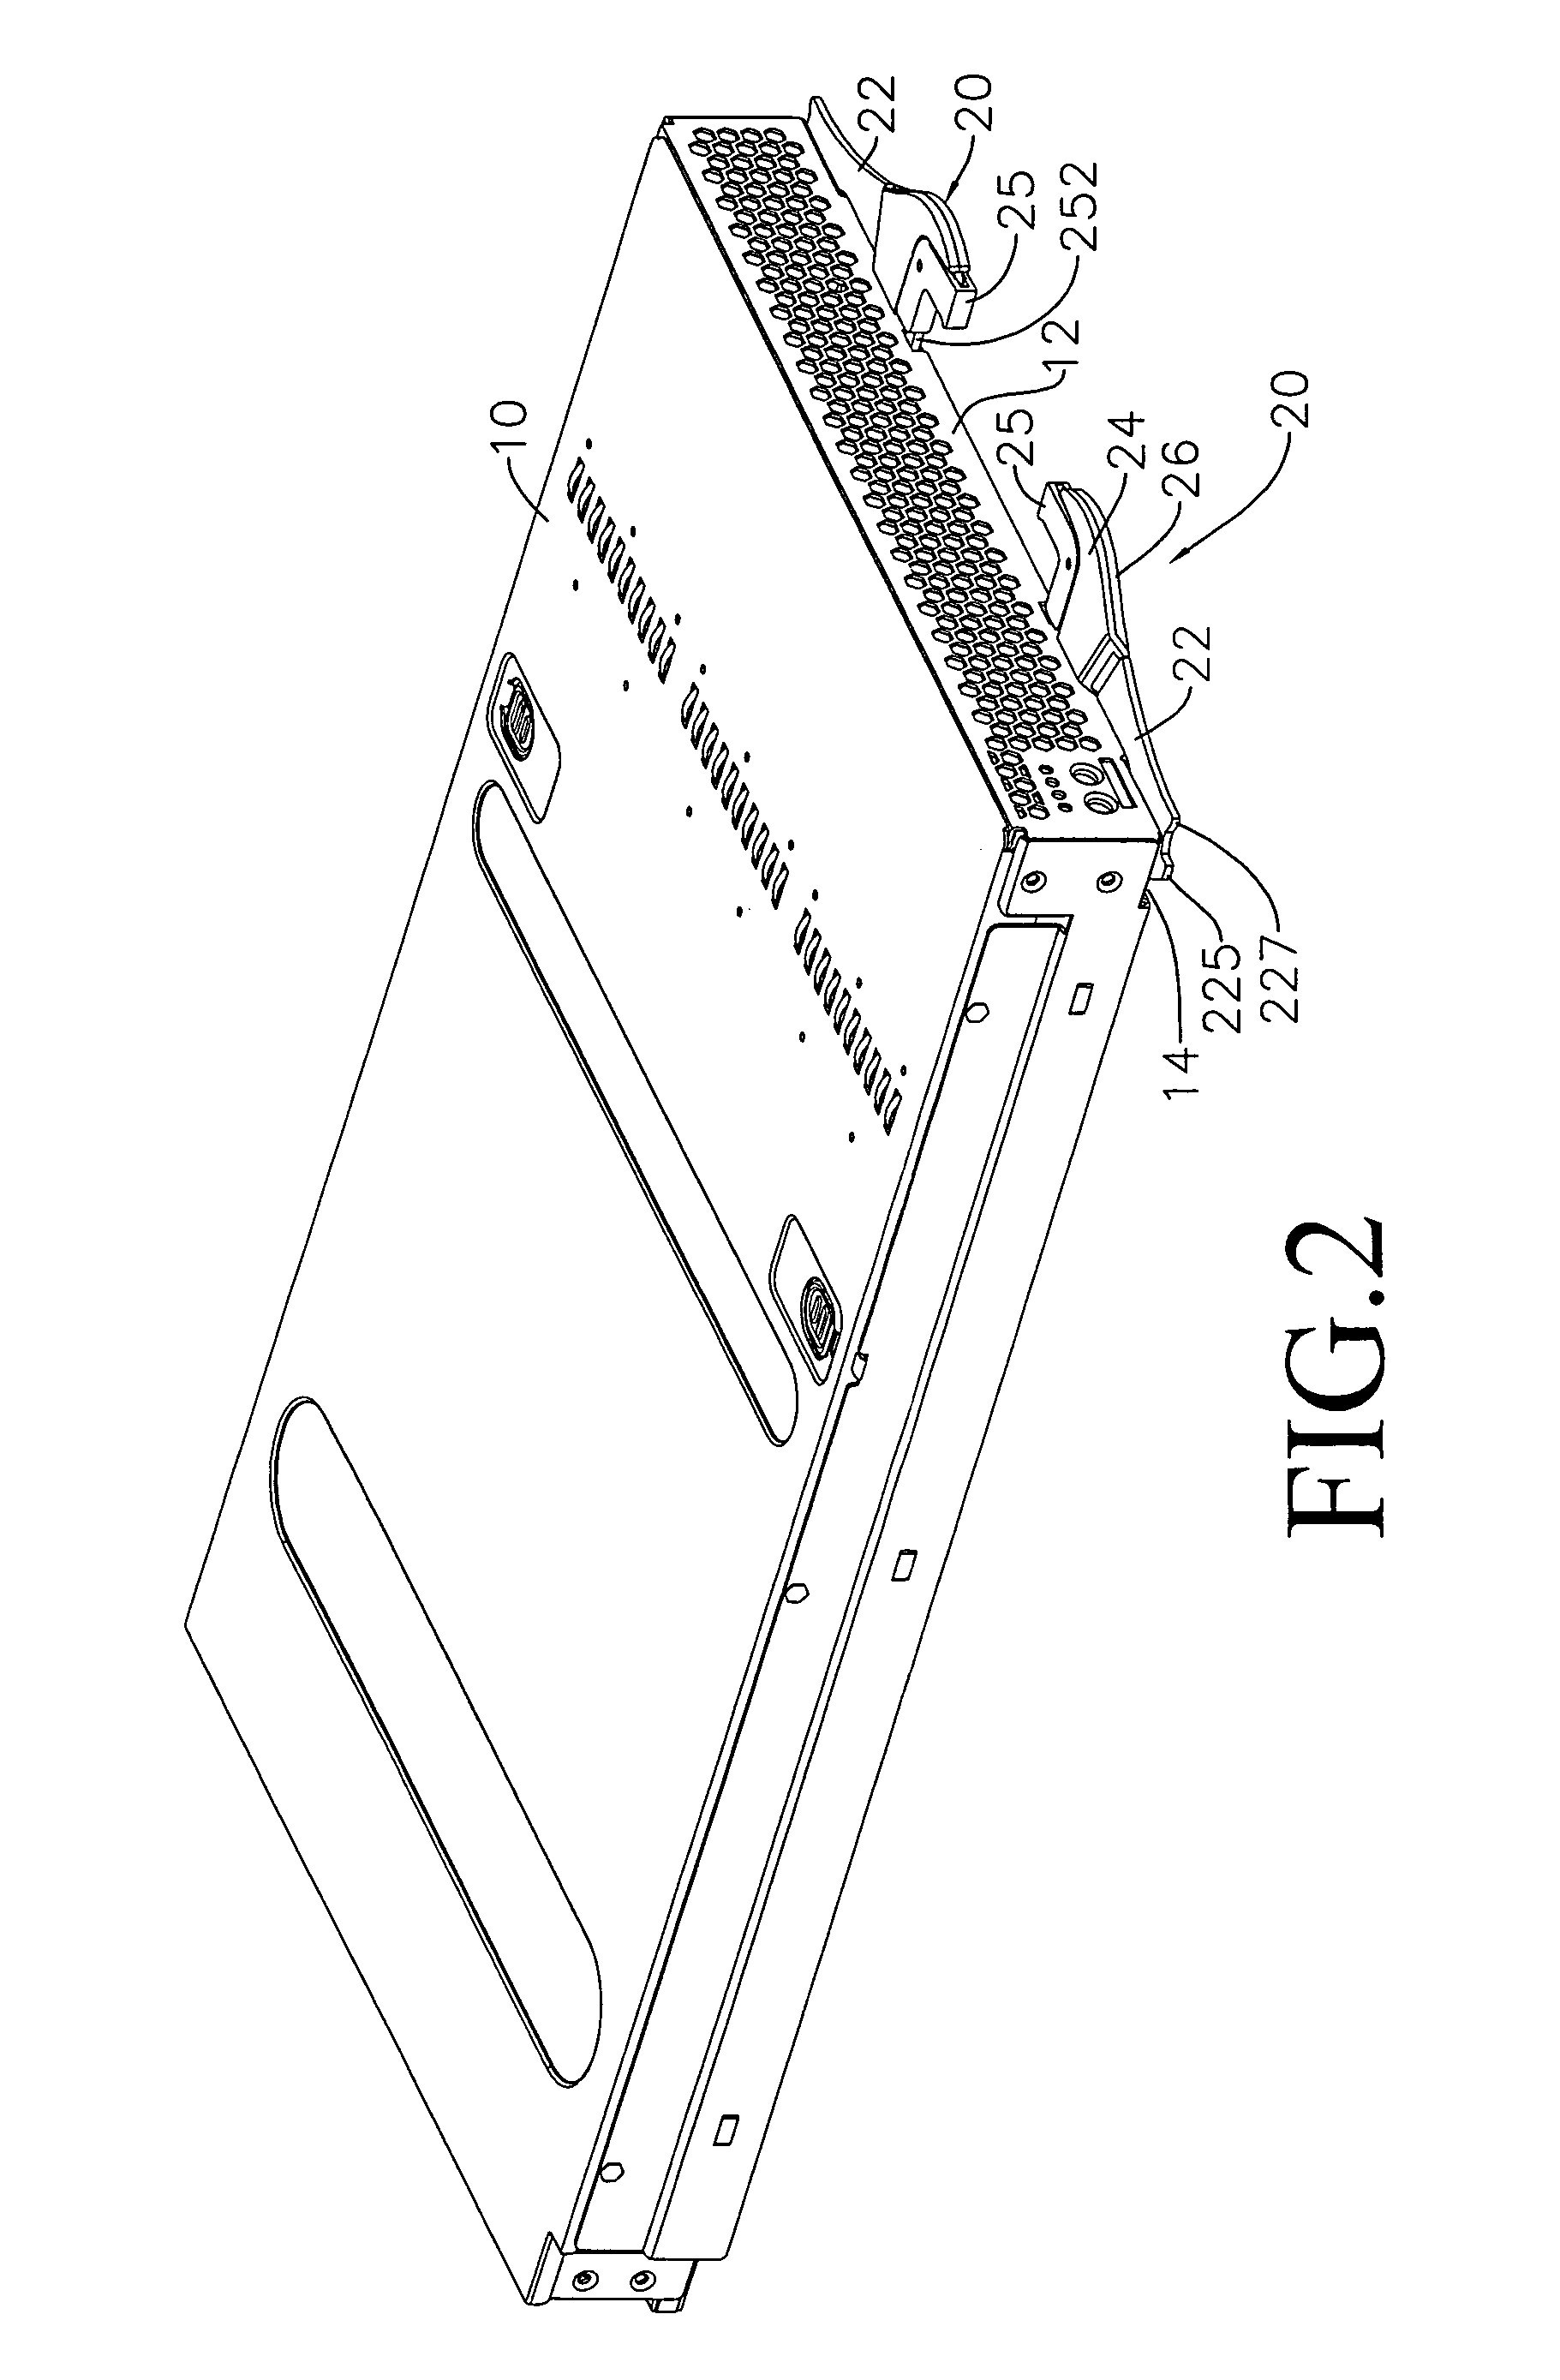 Modular case handle positioning device